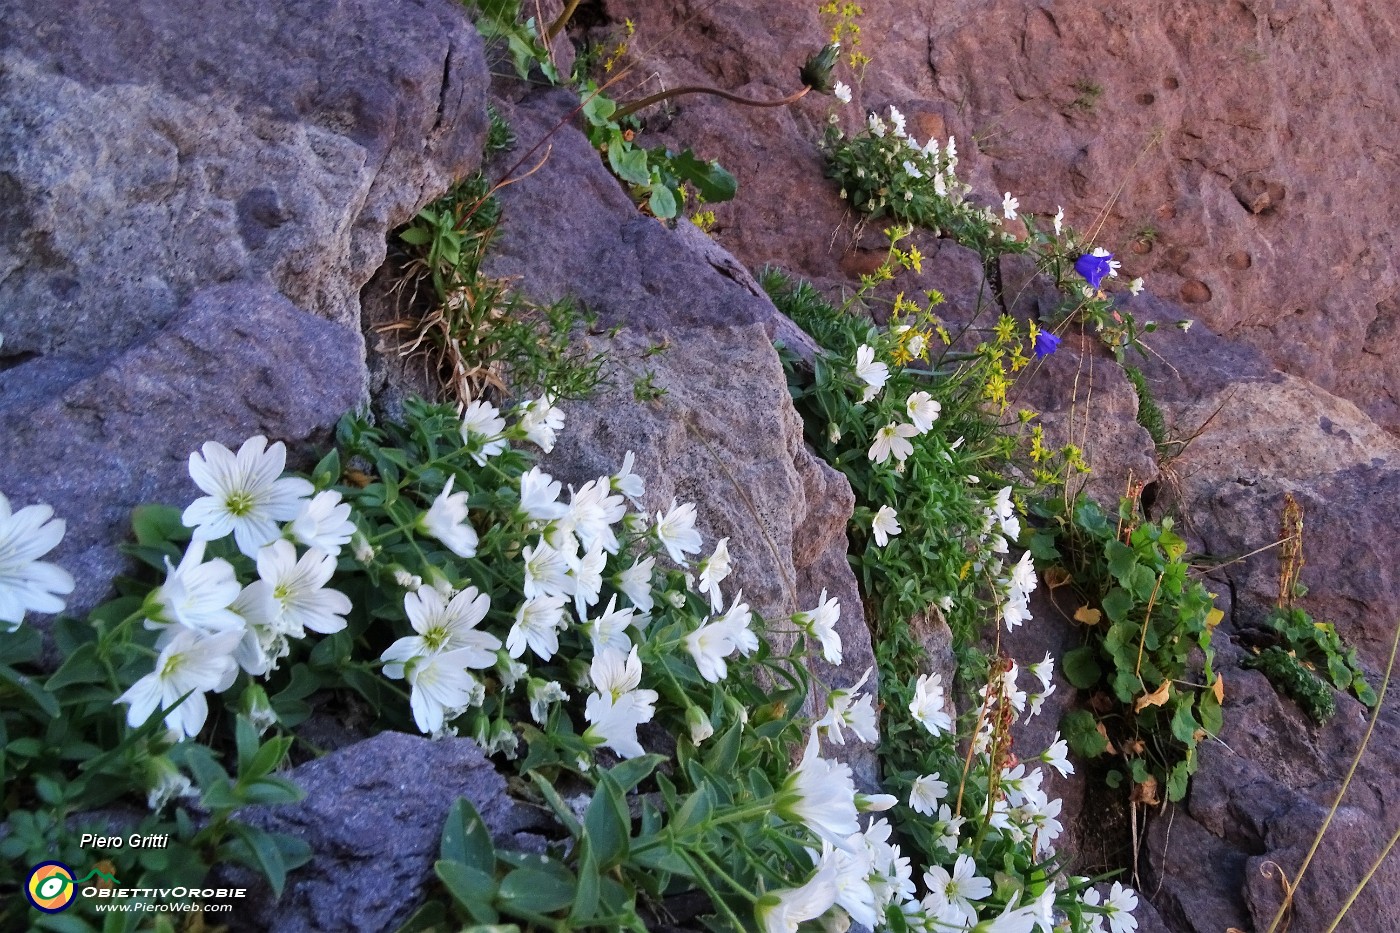 44 Bellissime fioriture bianche sulle rocce rosse di verrucano.JPG